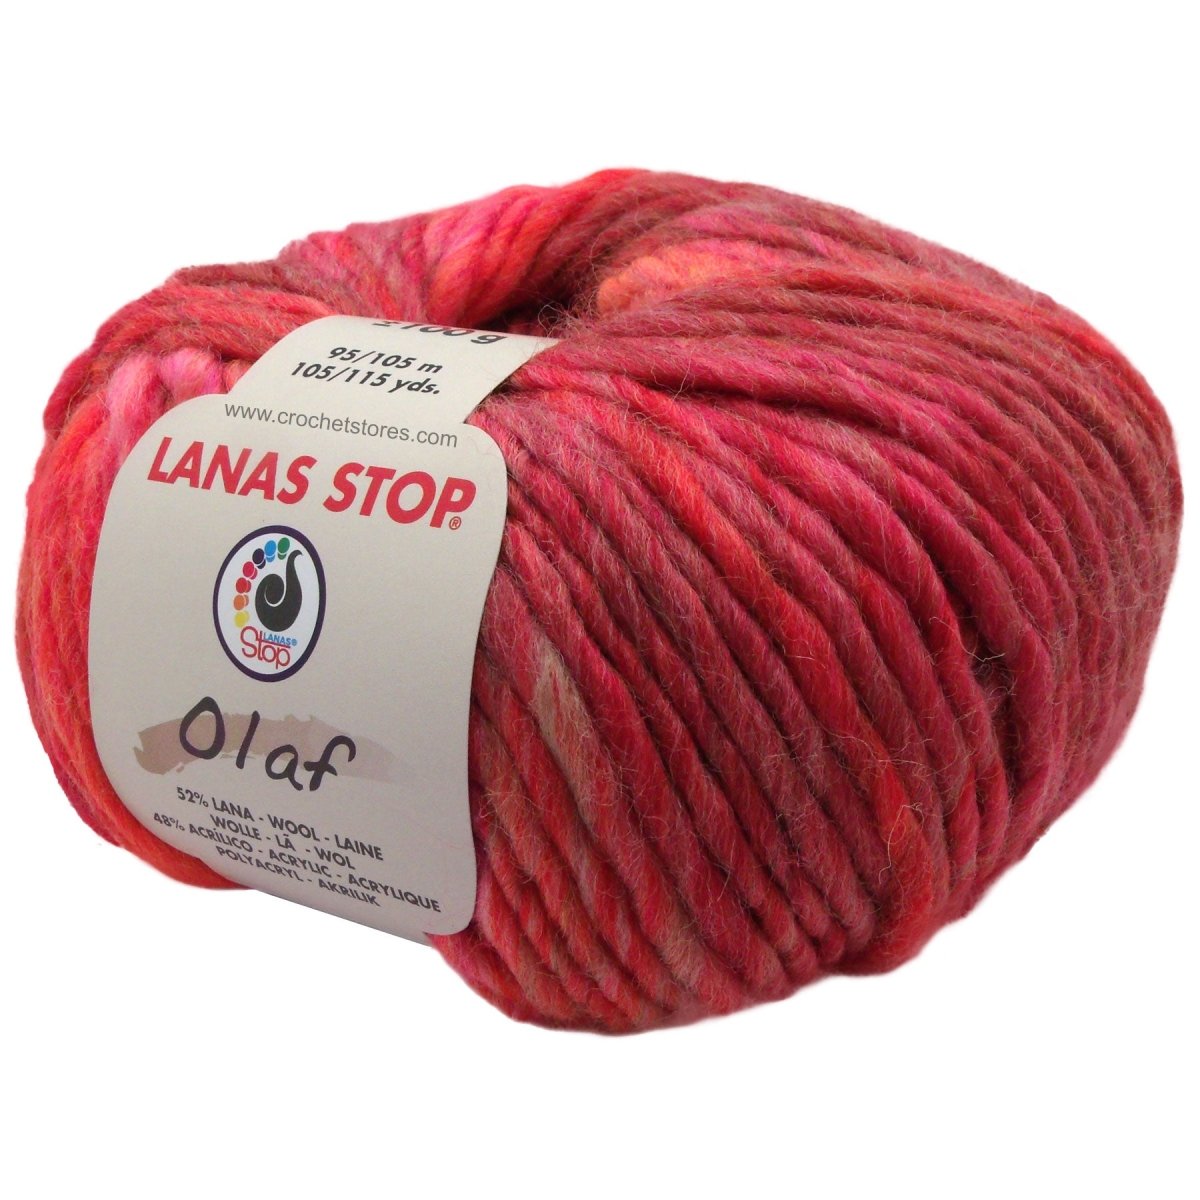 OLAF - CrochetstoresOLA2038430412319704